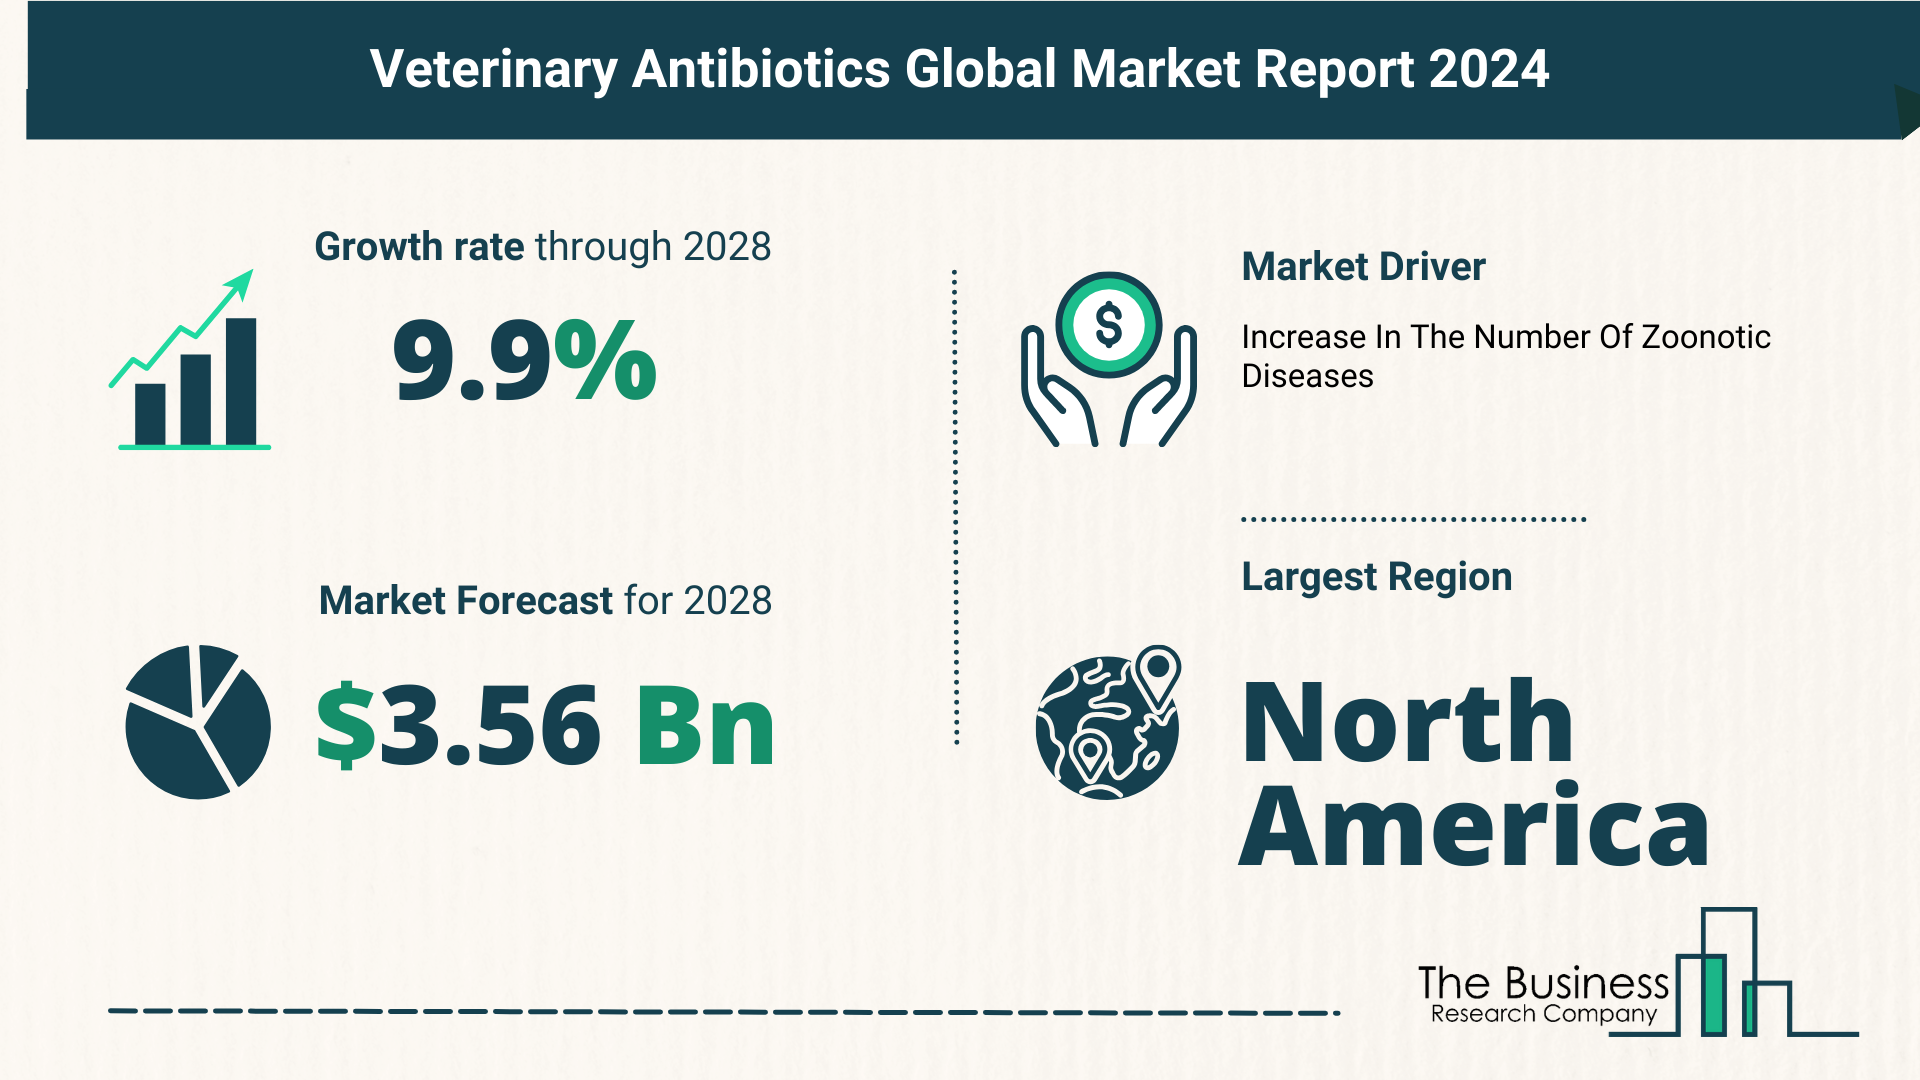 How Is The Veterinary Antibiotics Market Expected To Grow Through 2024-2033